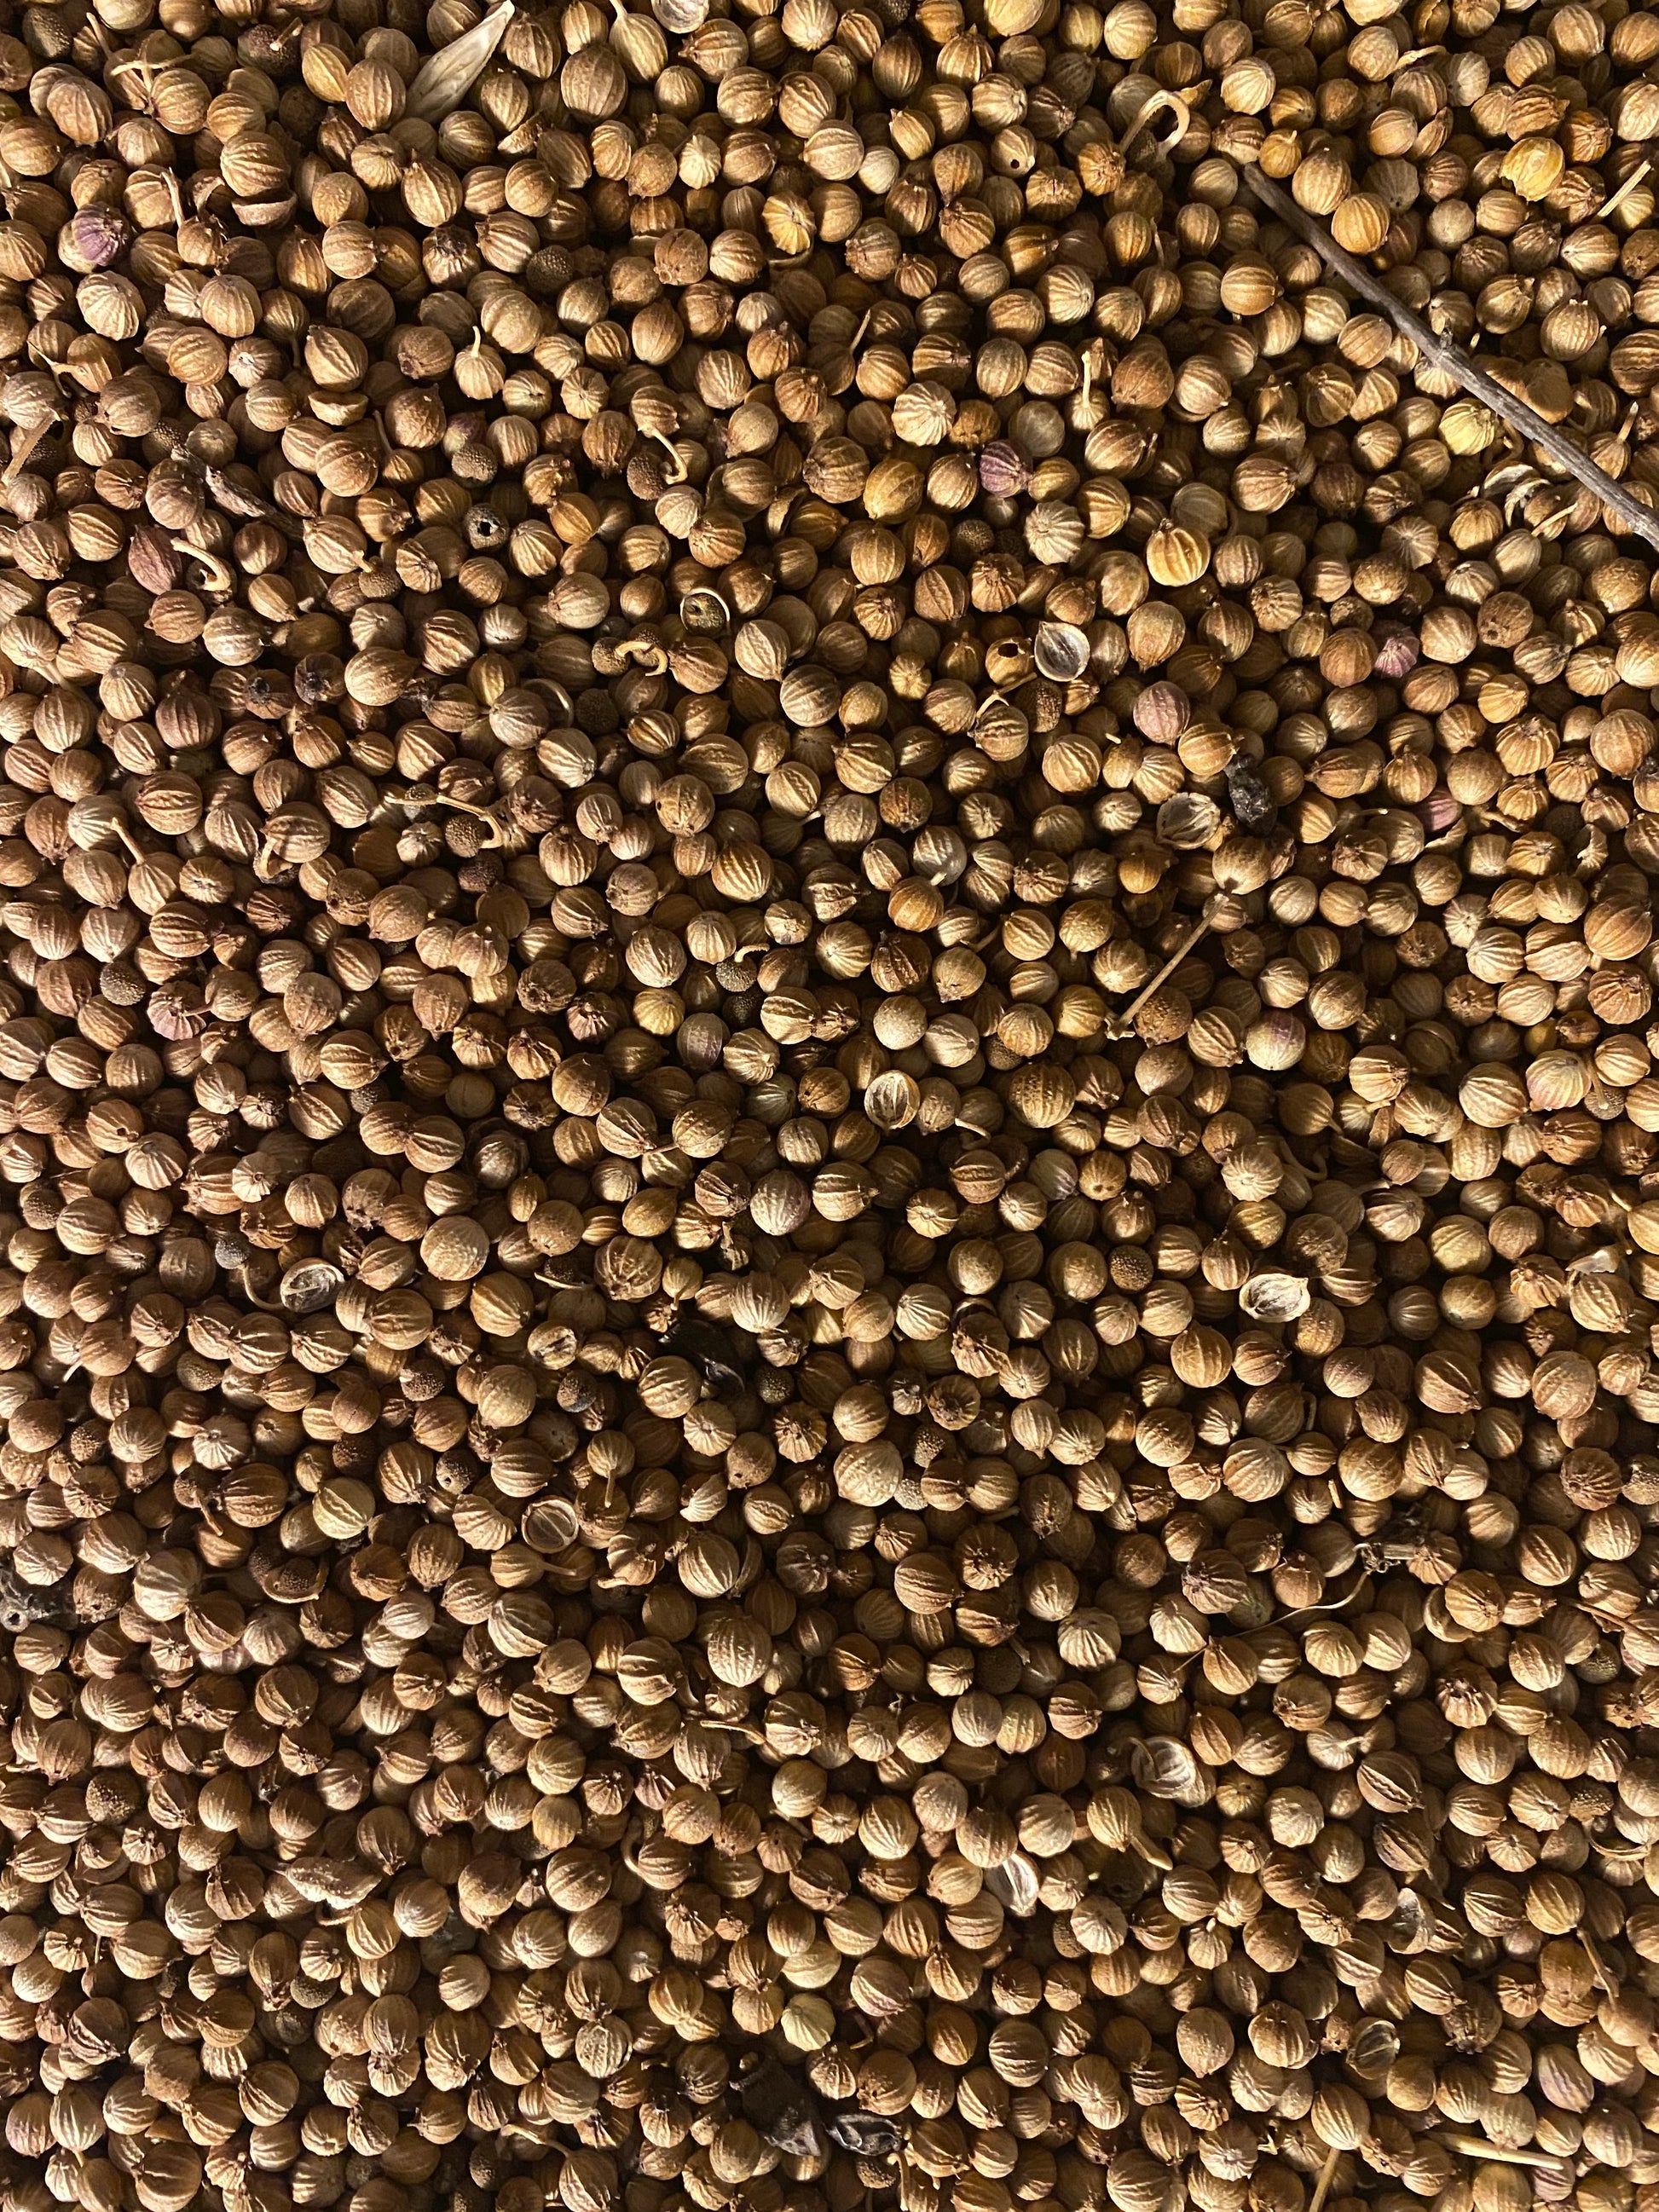 Graines de coriandre Poudre بذور القزبرة بودرة